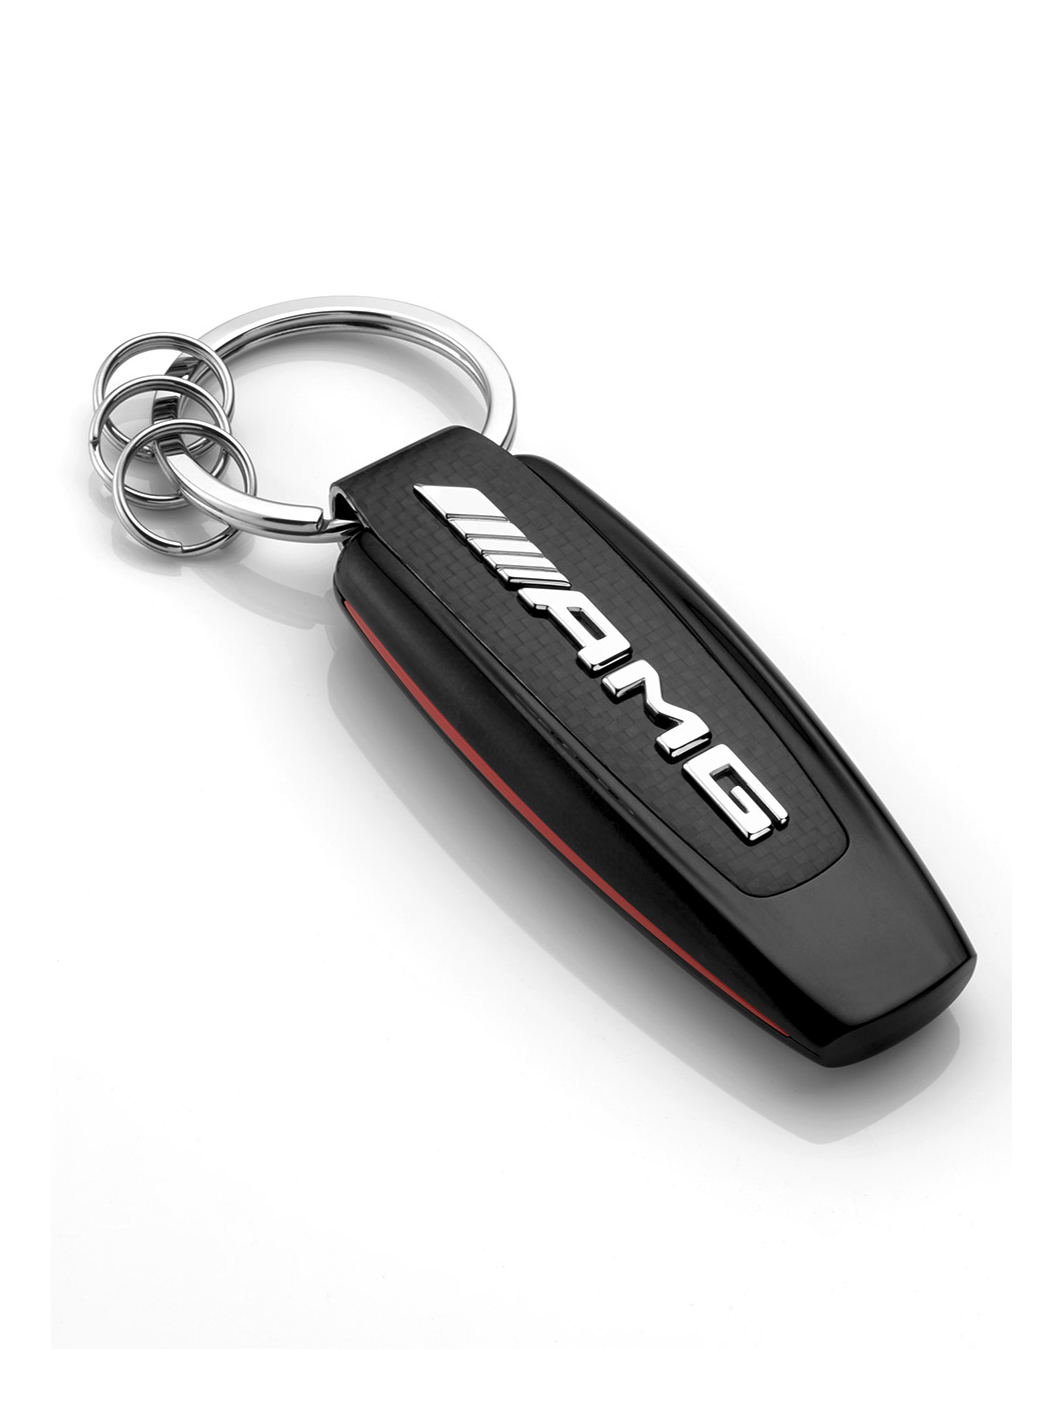 https://amg.mercedes-benz-classic-store.com/media/image/cf/e1/b7/AMG-typo-key-ring-silver-black-red-style-car-B66953338.jpg